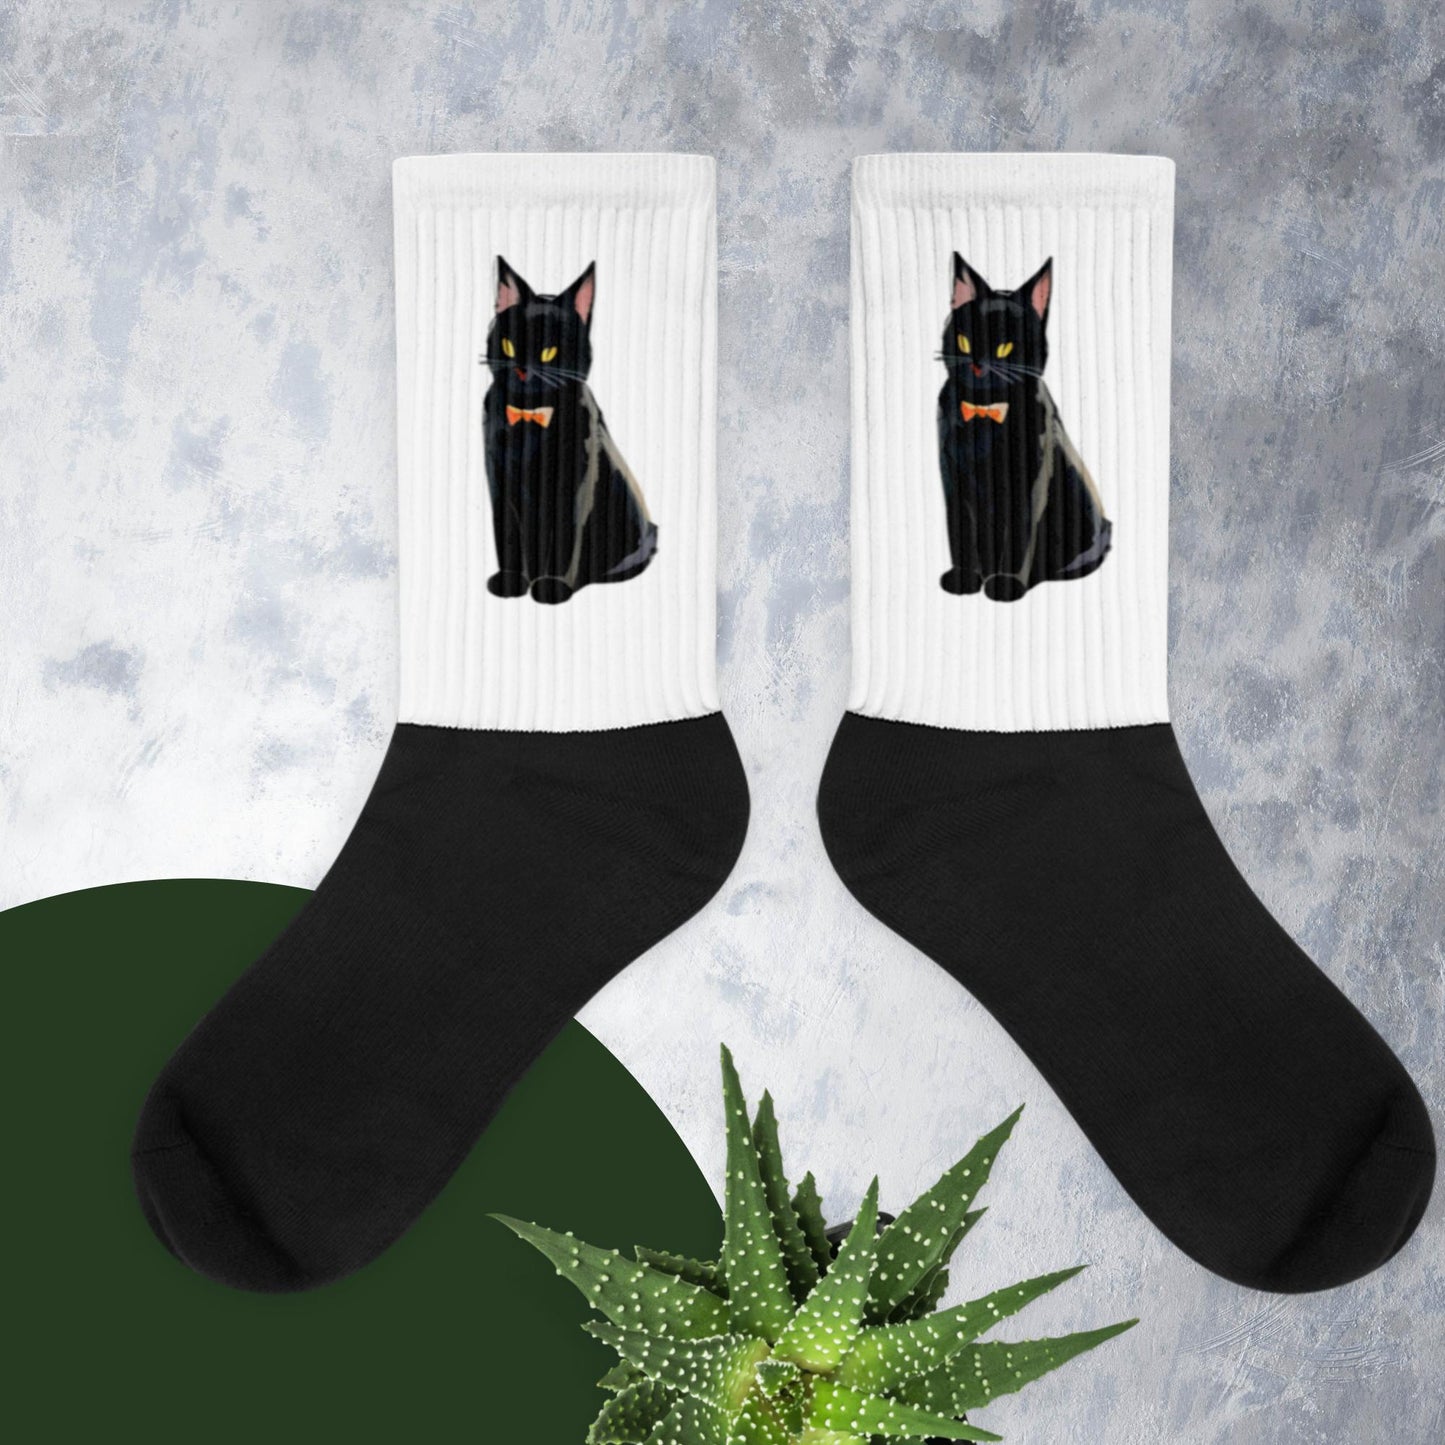 Socks black cat with orange bowtie